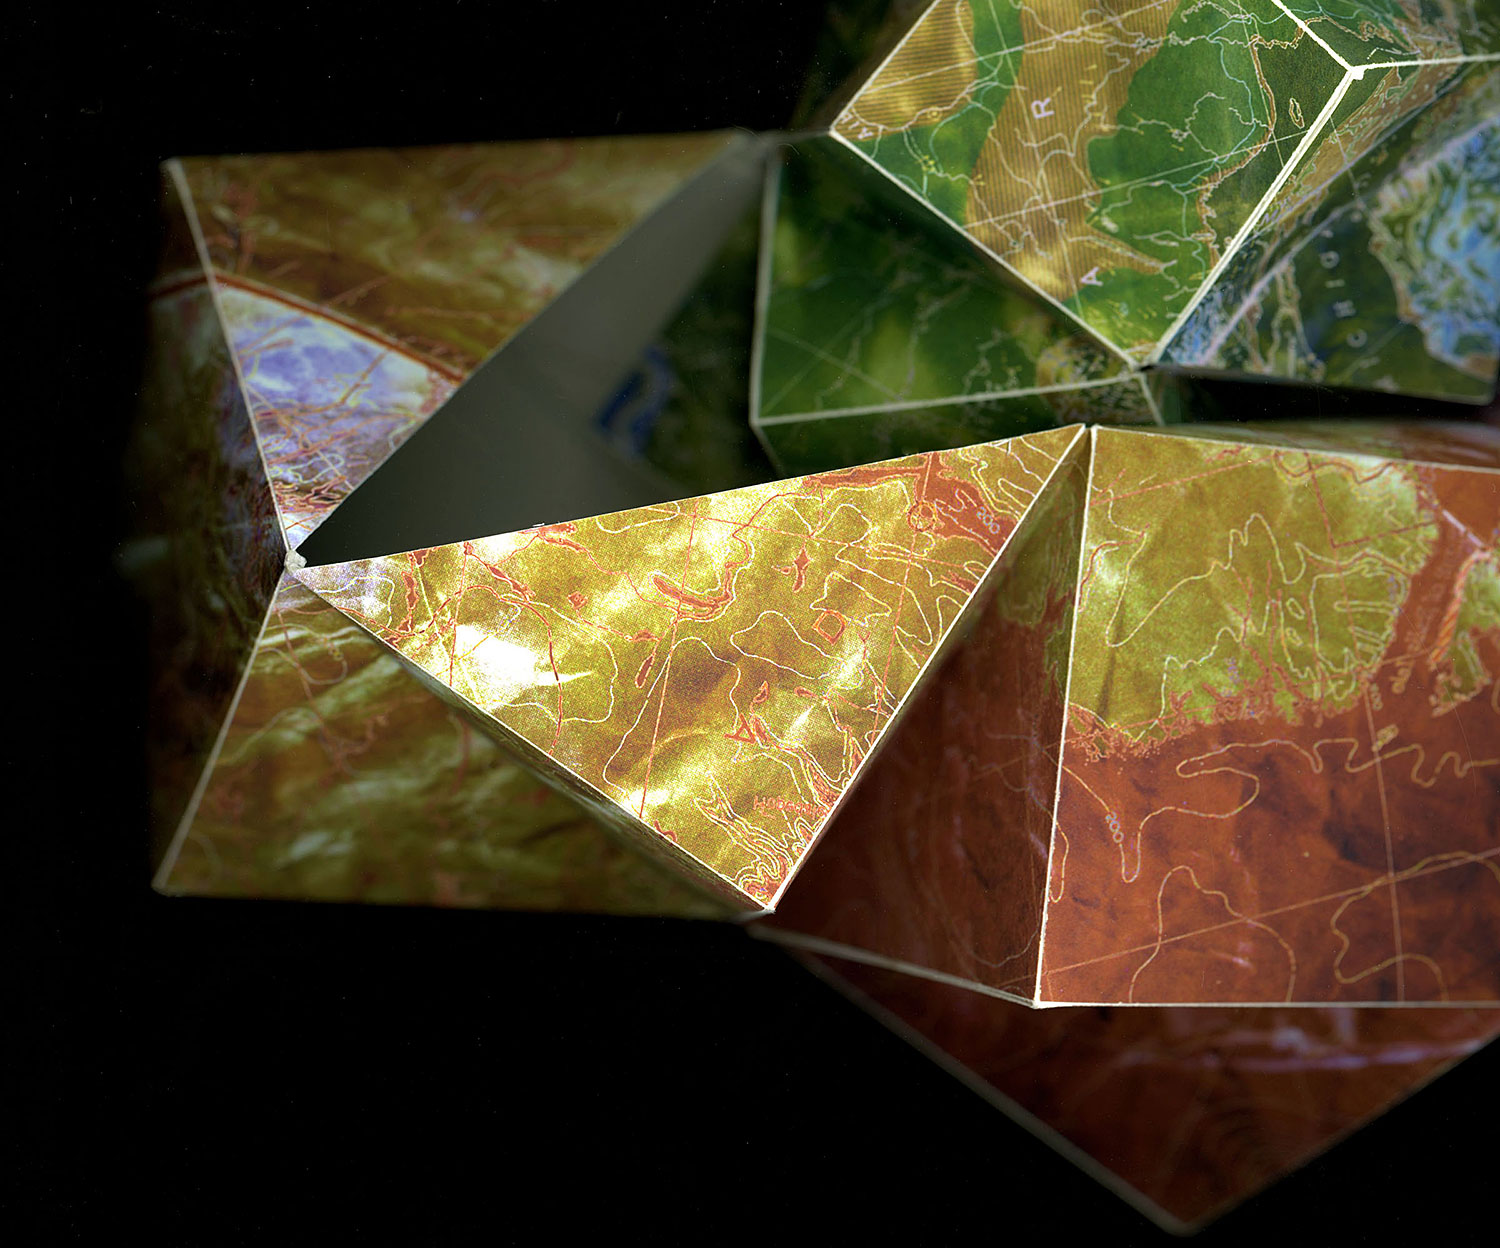 Werner Sun, silver dandelion, 2012. Photomontage, digital photographs, dimensions variable.